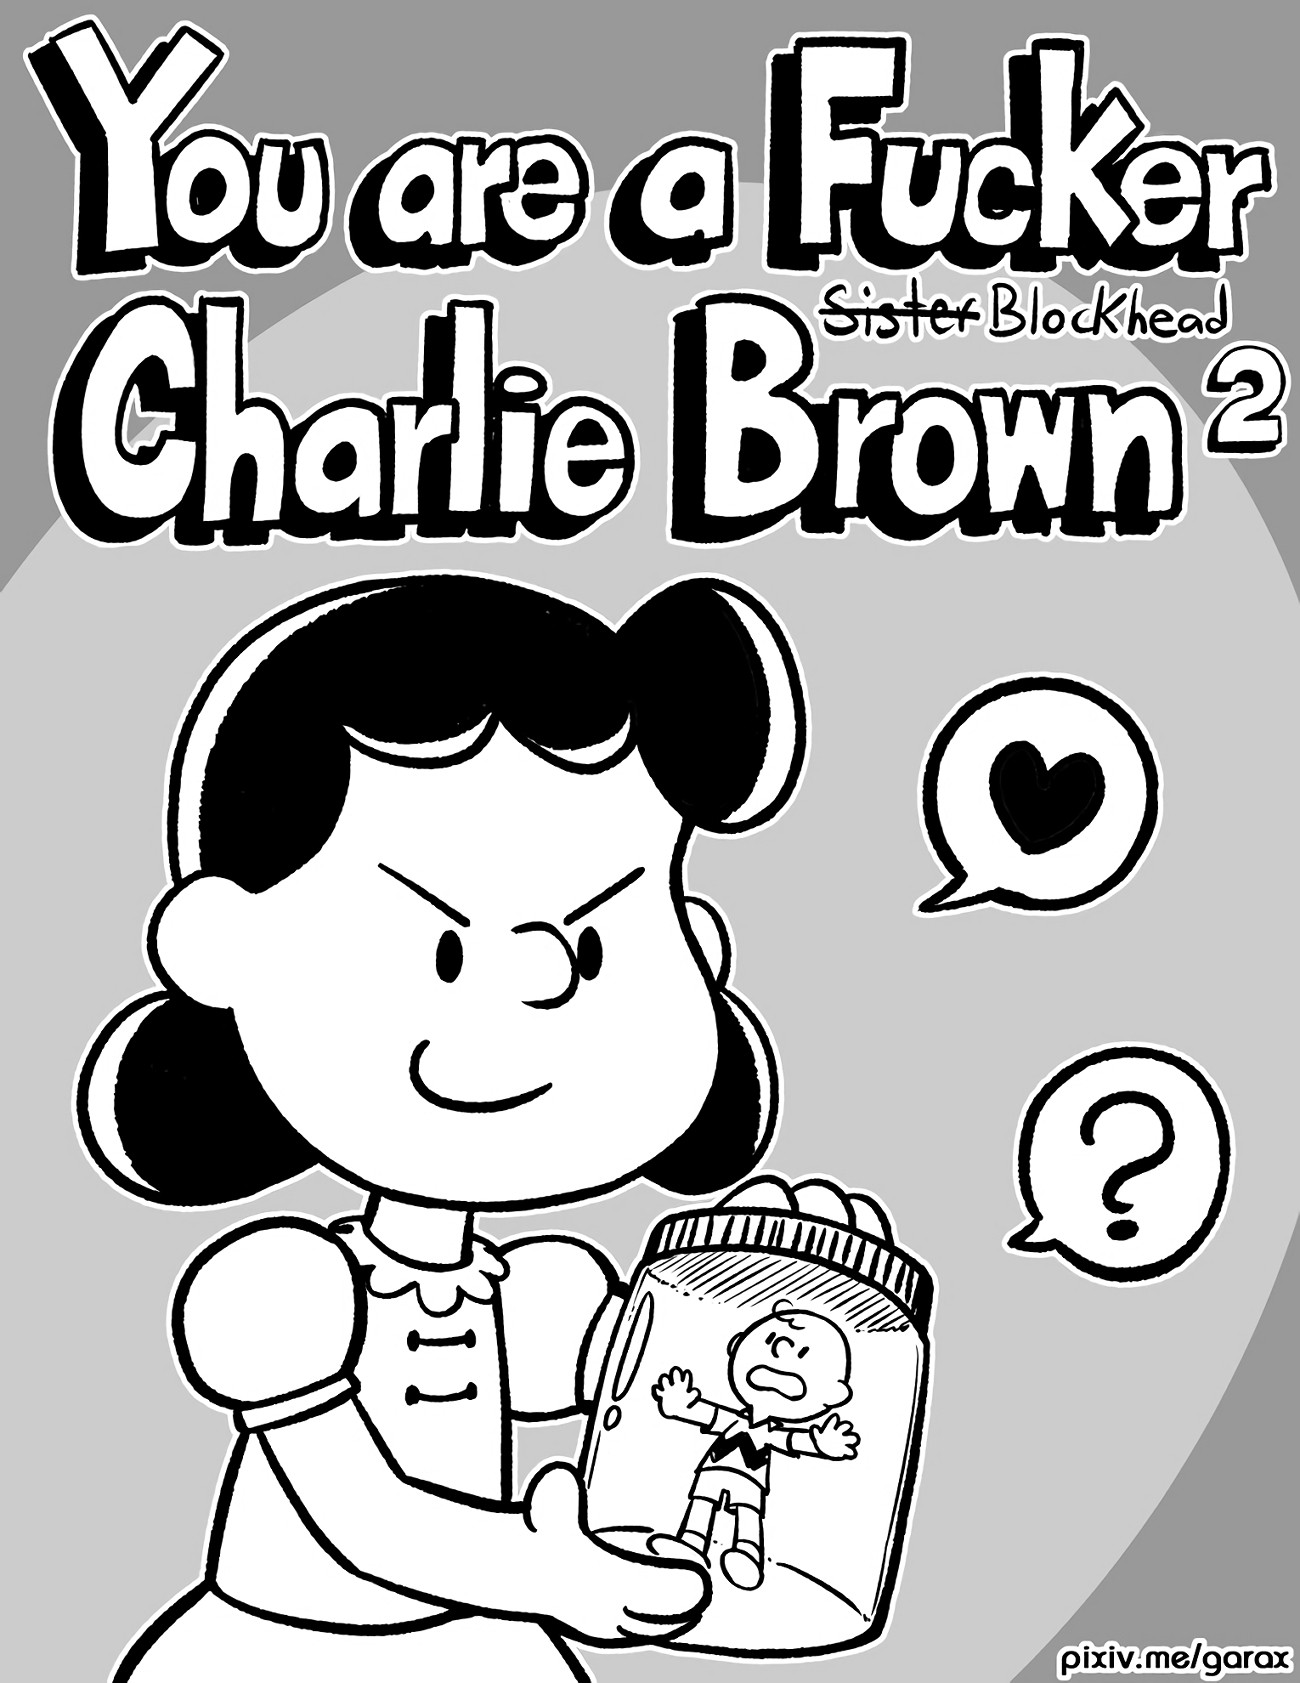 You're a fucker charlie brown - Garabatoz